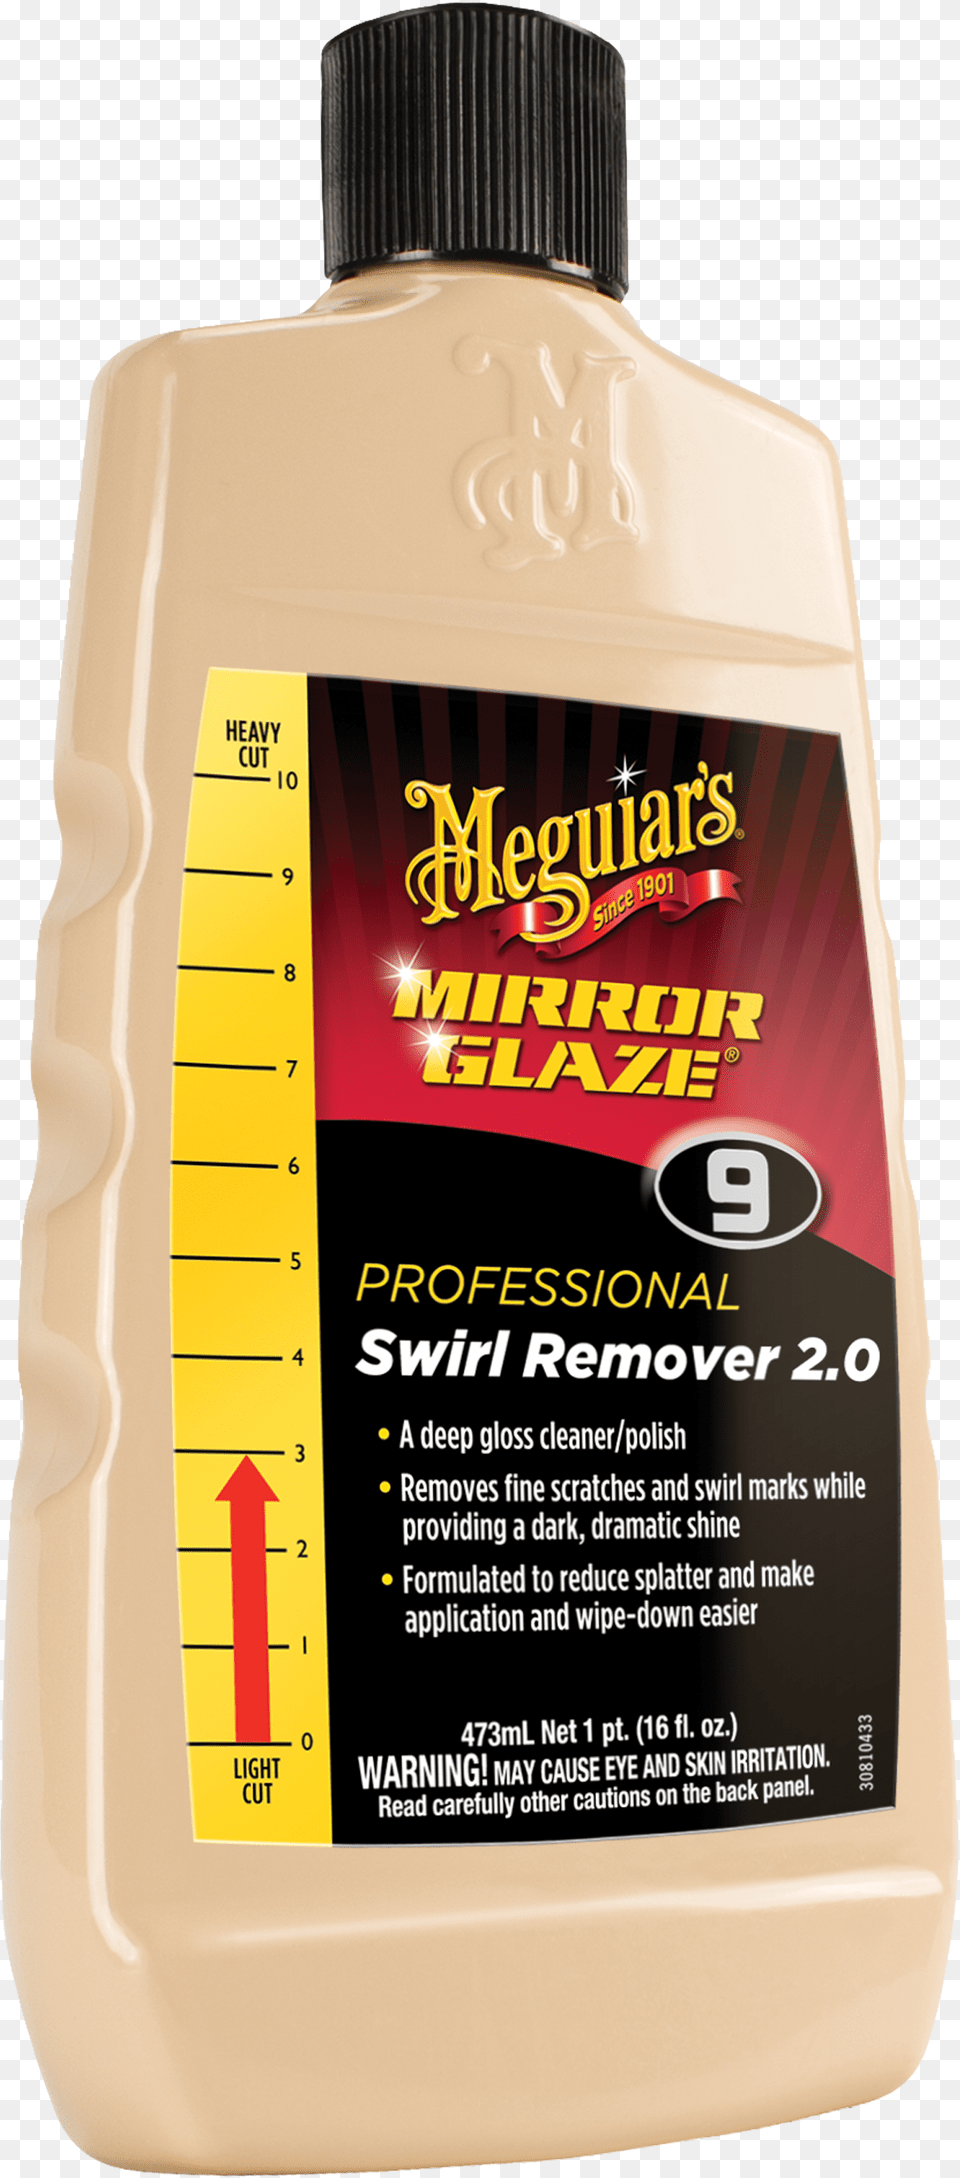 Mirror Glaze Swirl Remover 16 Oz Meguiars Fine Cut Cleaner, Bottle, Cosmetics, Perfume, Food Png